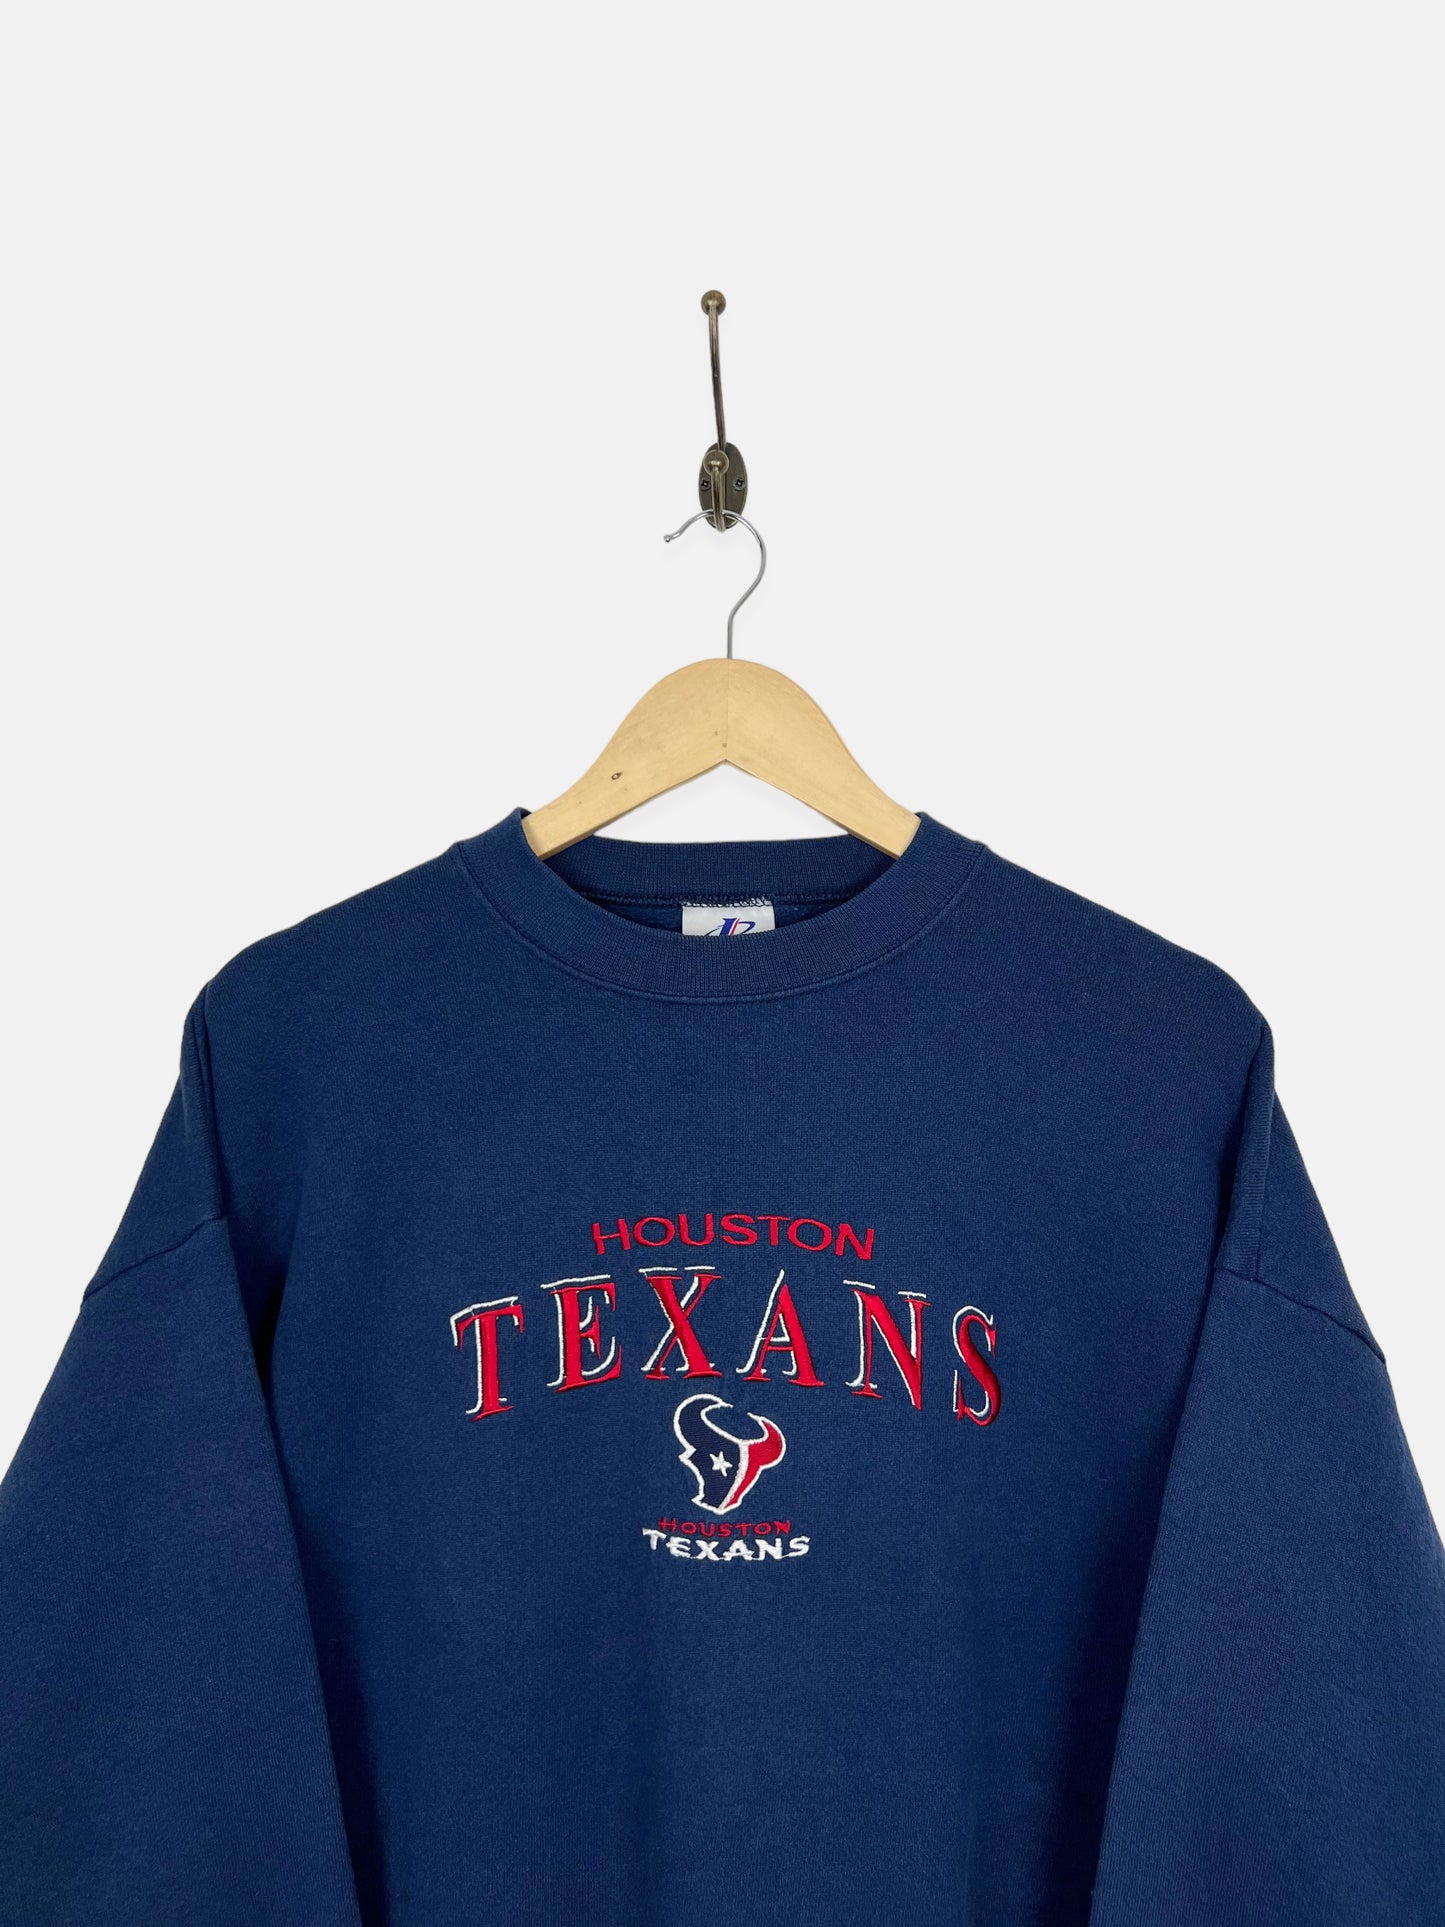 90's Houston Texans NFL Embroidered Vintage Sweatshirt Size L